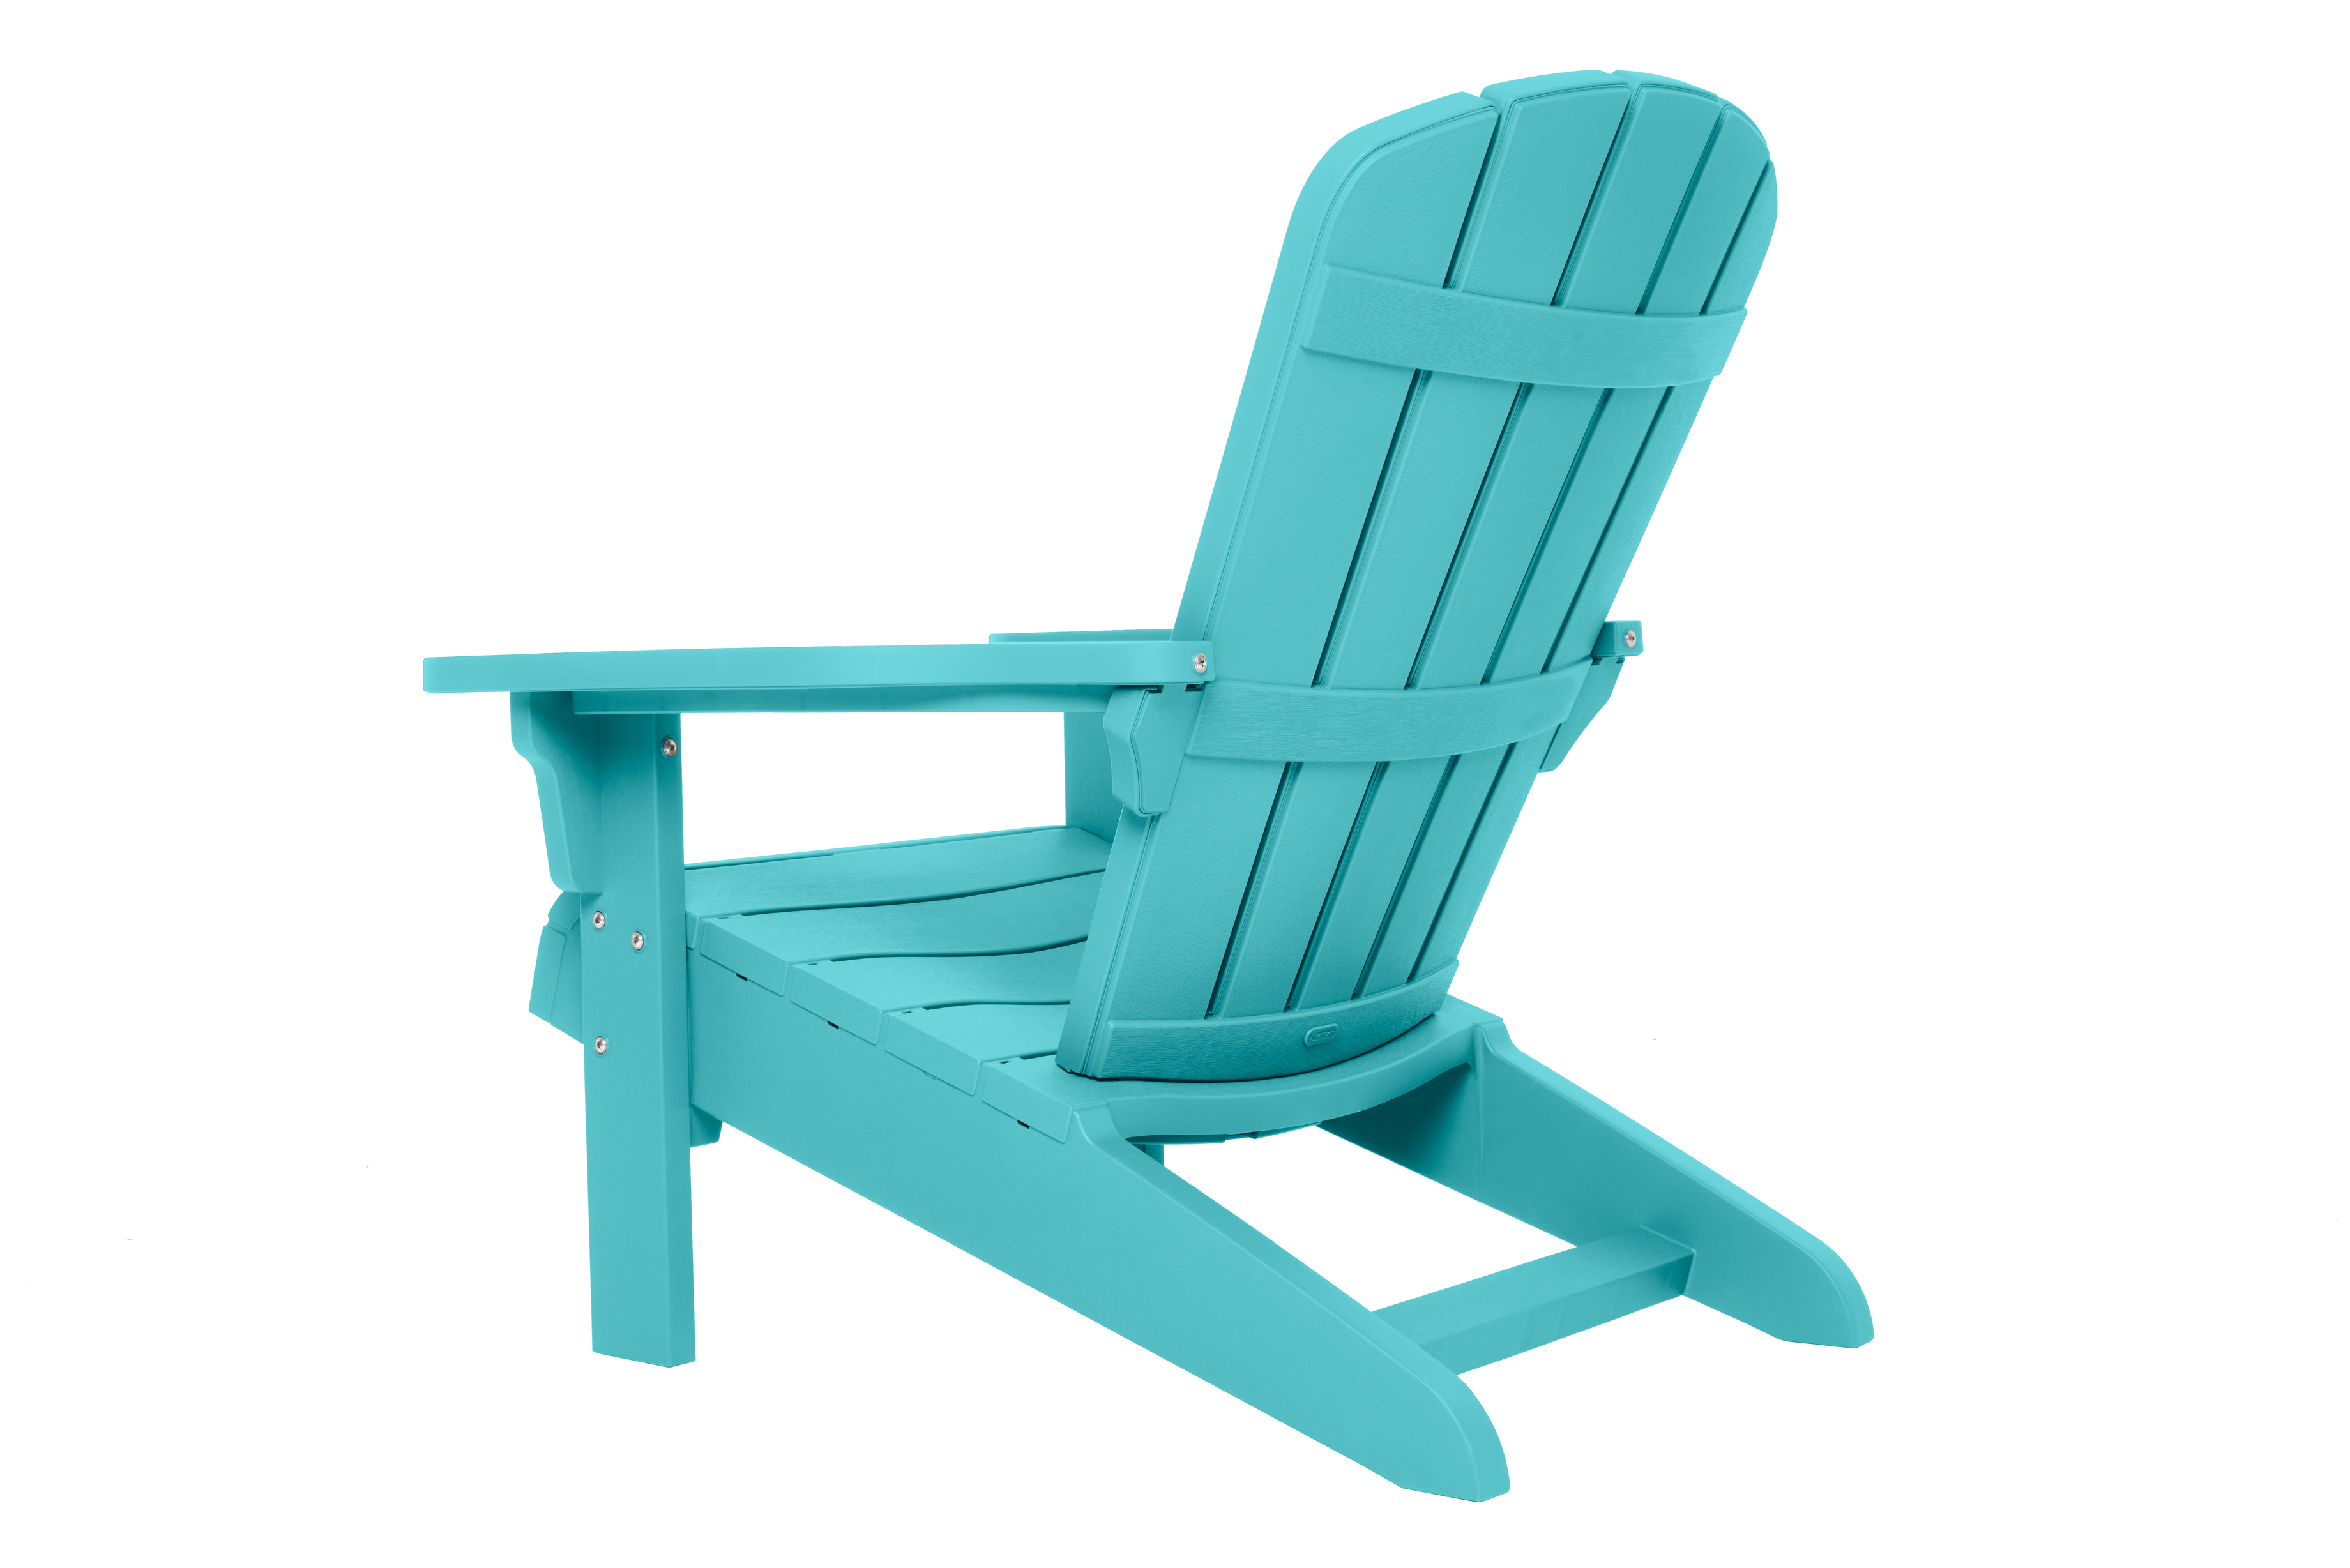 Keter Adirondack Chair, Resin Outdoor Furniture, Teal - image 5 of 7